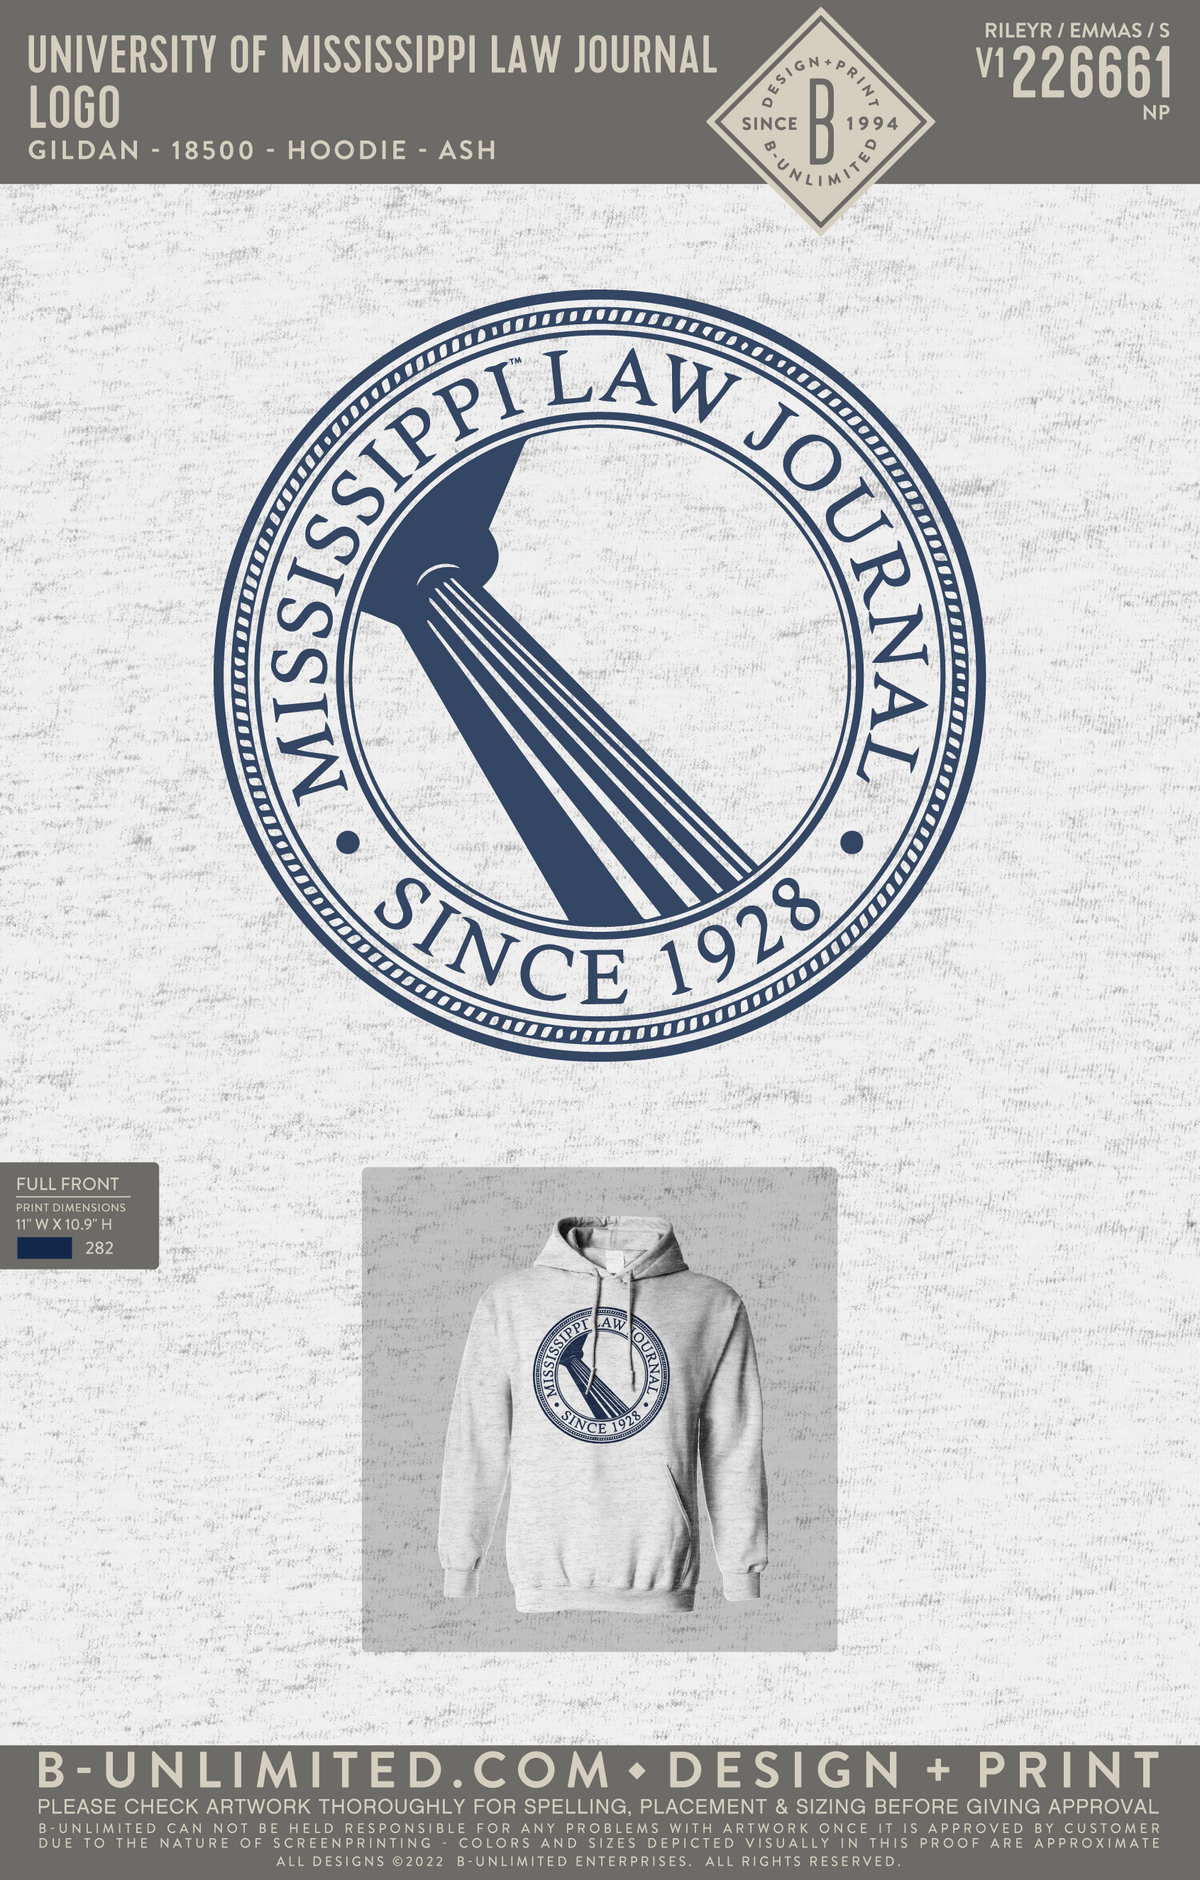 University of Mississippi Law Journal - Logo - Gildan - 18500 - Hoodie - Ash